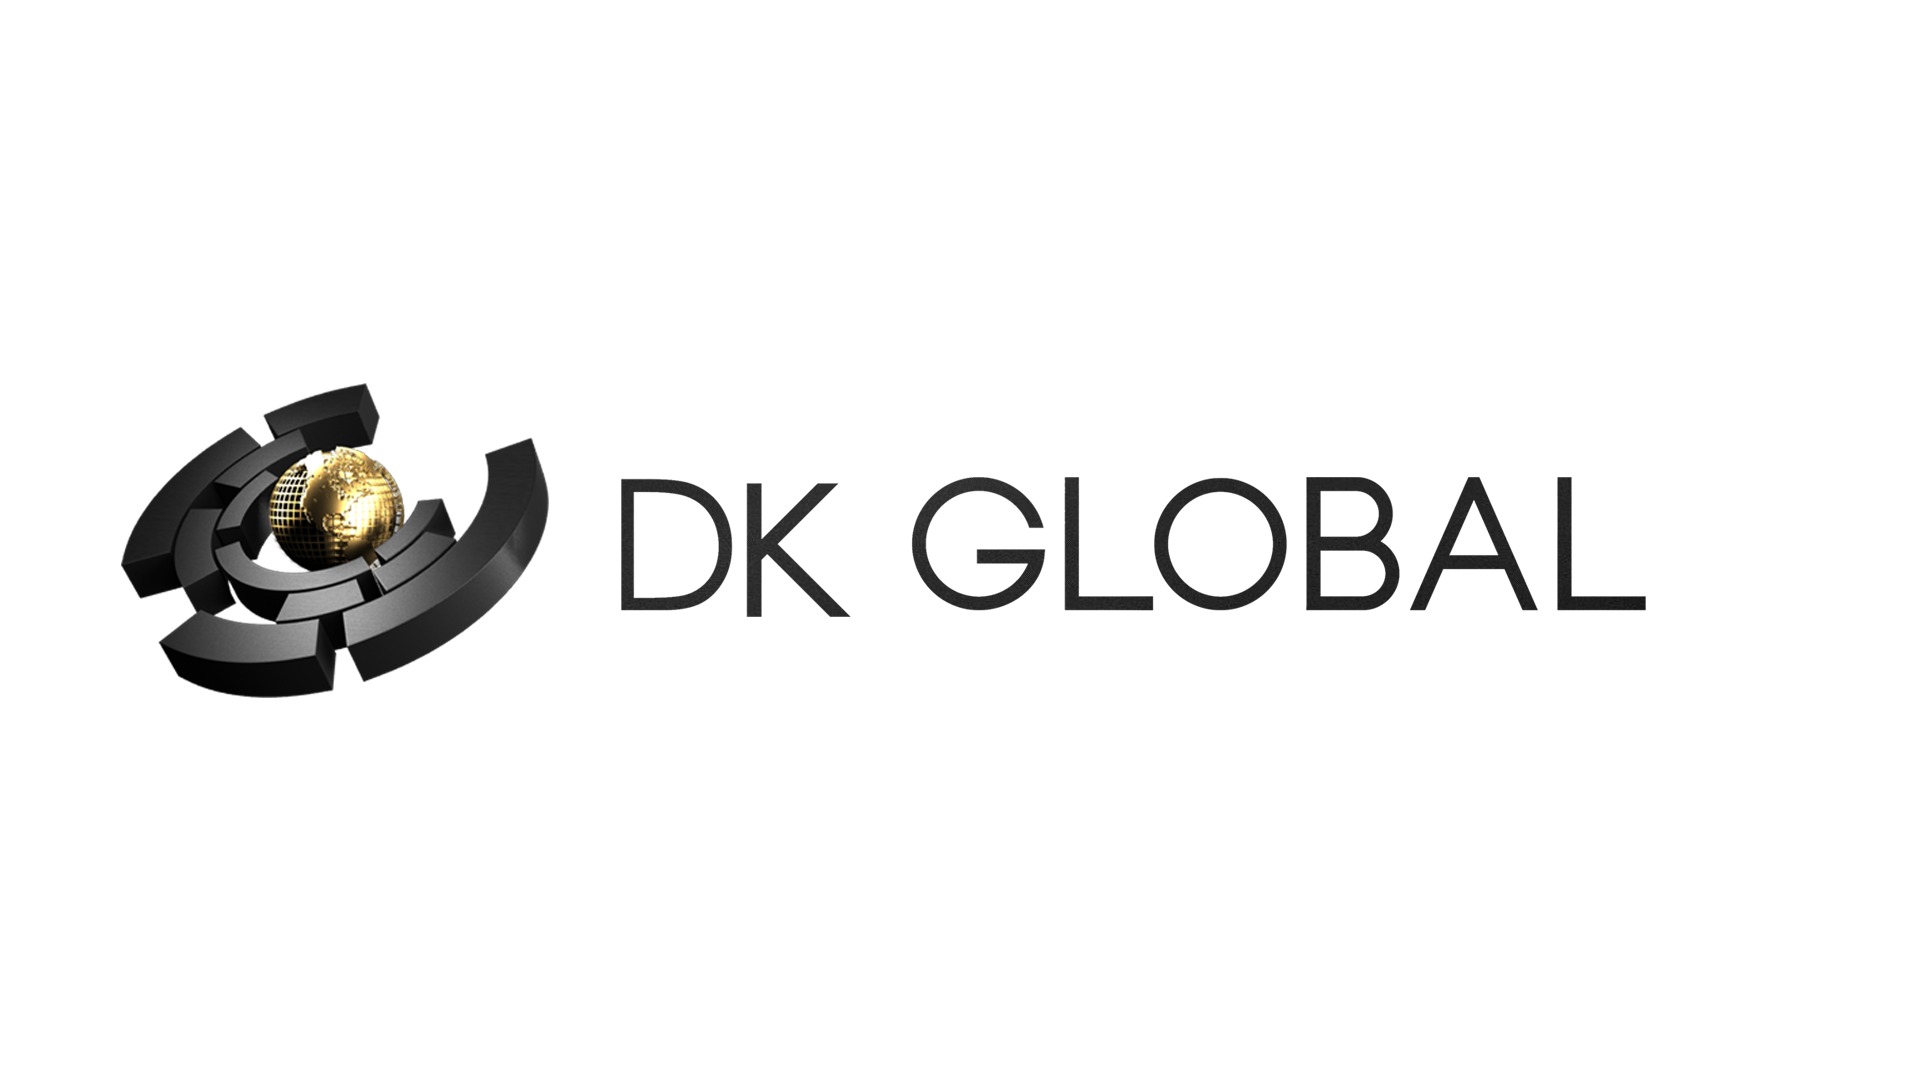 DK Global